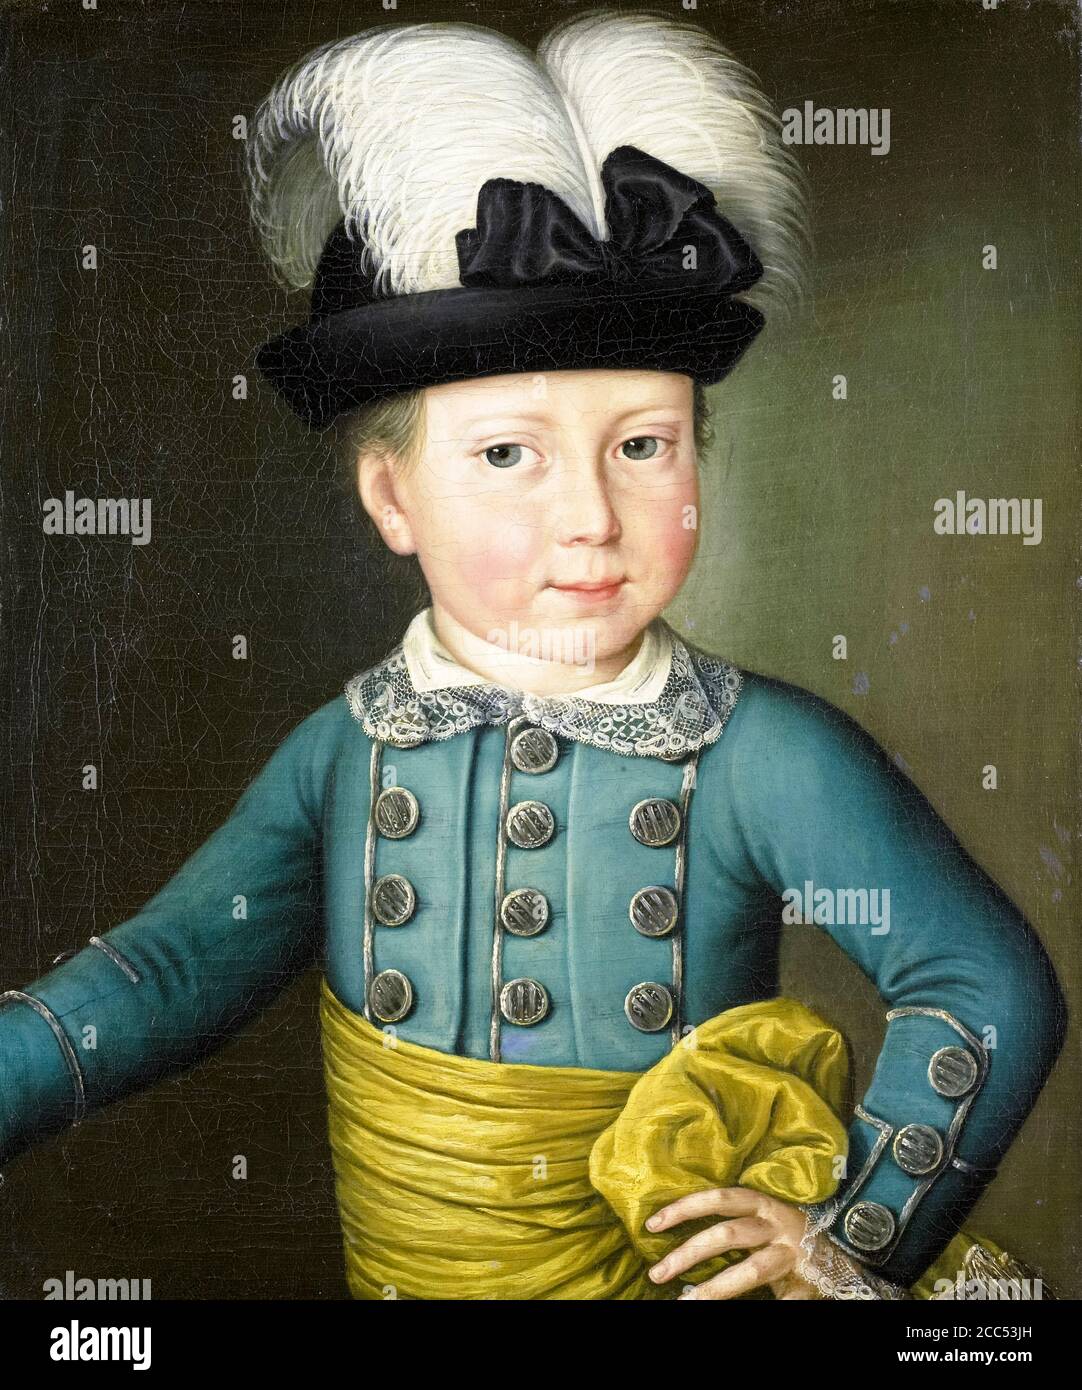 William Frederick (1772-1843), prince d'Orange-Nassau, plus tard roi William I, comme enfant, portrait peint vers 1775 Banque D'Images